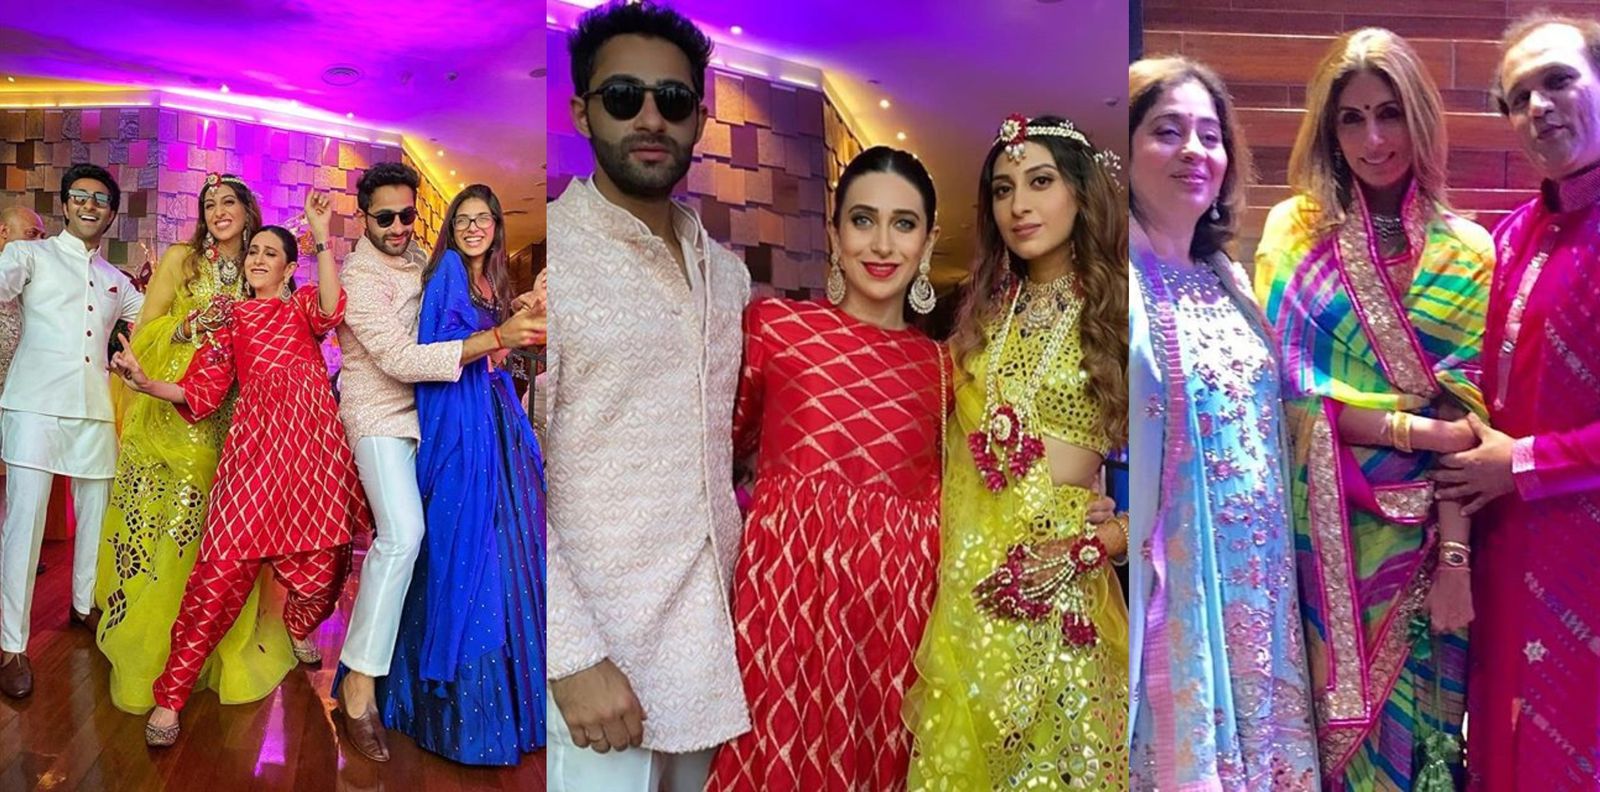 Armaan Jain-Anissa Malhotra Wedding: Couple Dance With Karisma Kapoor, Pose On Their Sangeet Night! See Pics And Videos...